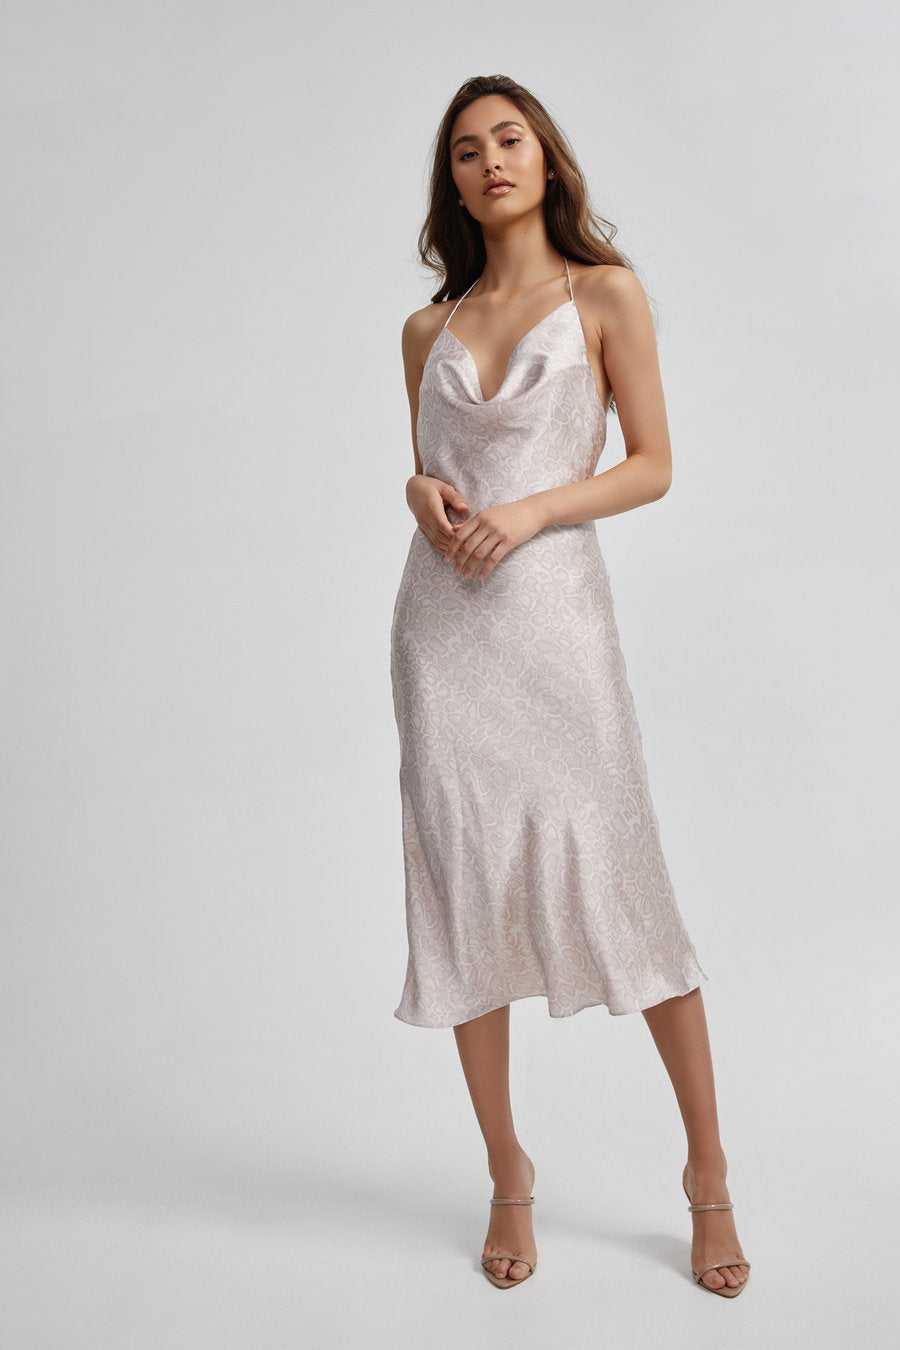 Lexi Clothing Maria Dress | Lexi Dresses